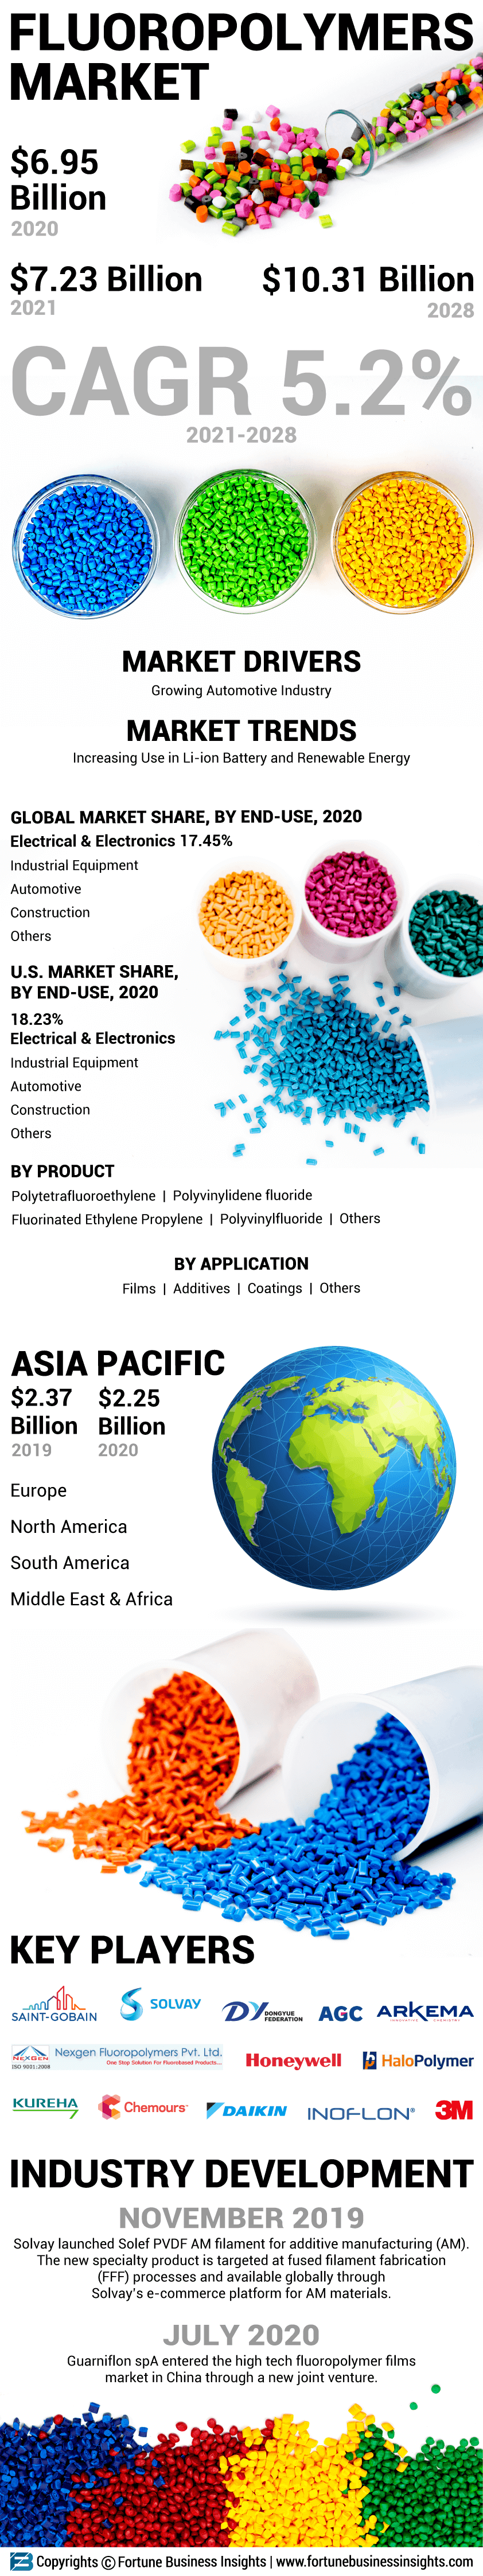 Fluoropolymers Market